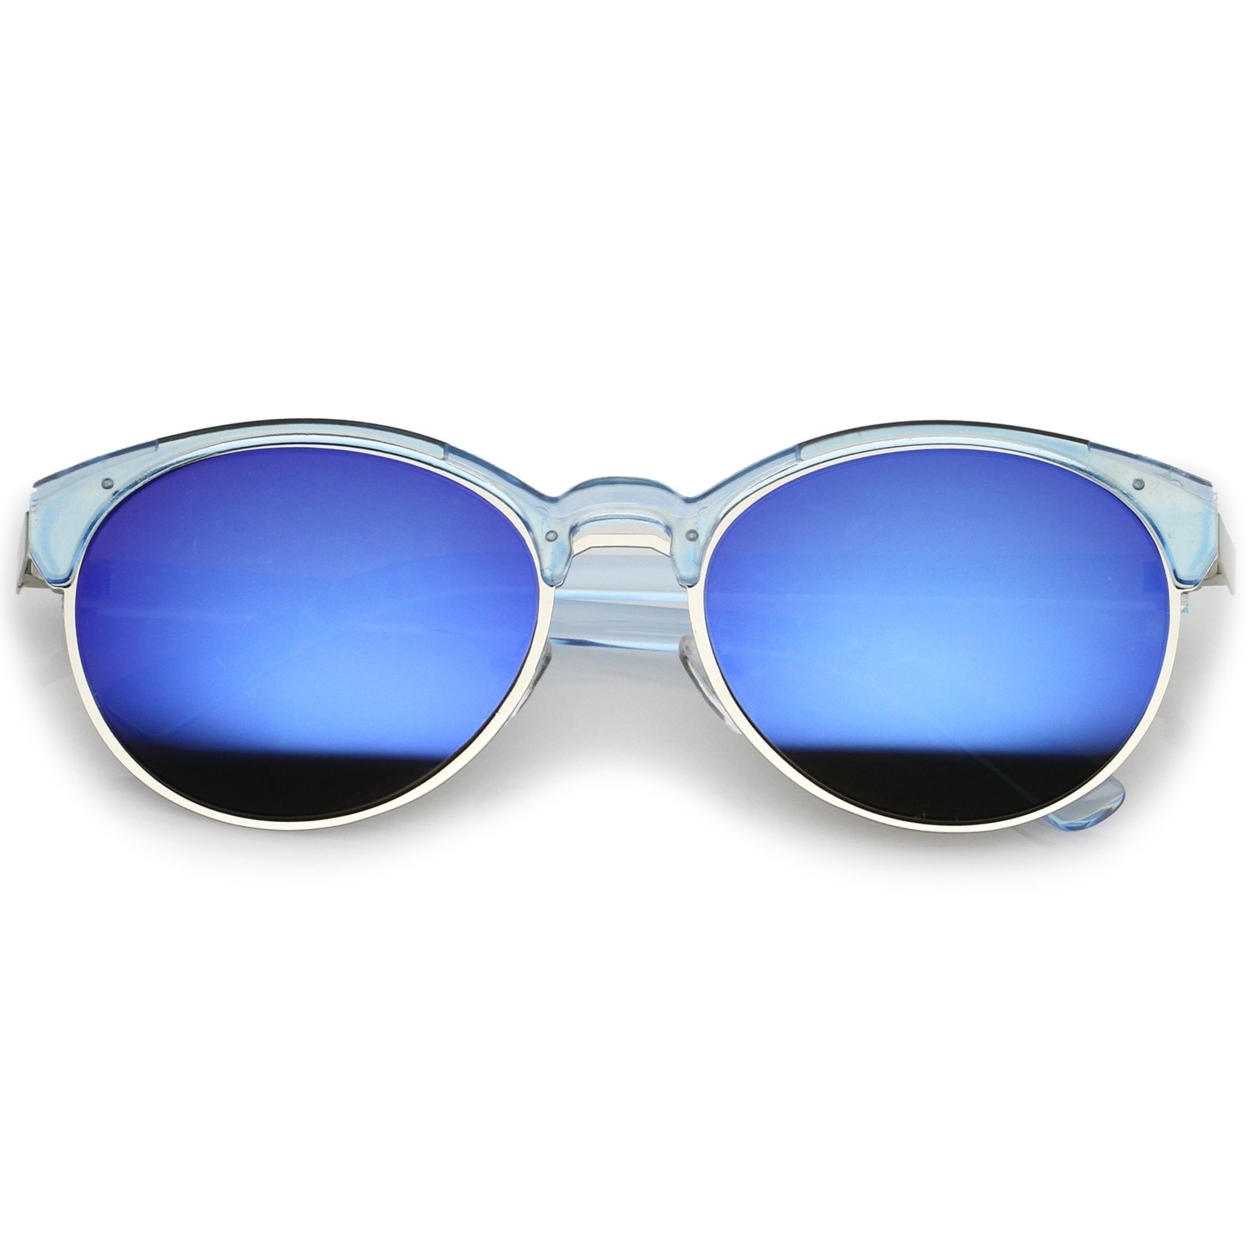 Double Nose Bridge Metal Trim Mirror Lens Round Cat Eye Sunglasses 55mm - Blue-Silver / Blue Mirror